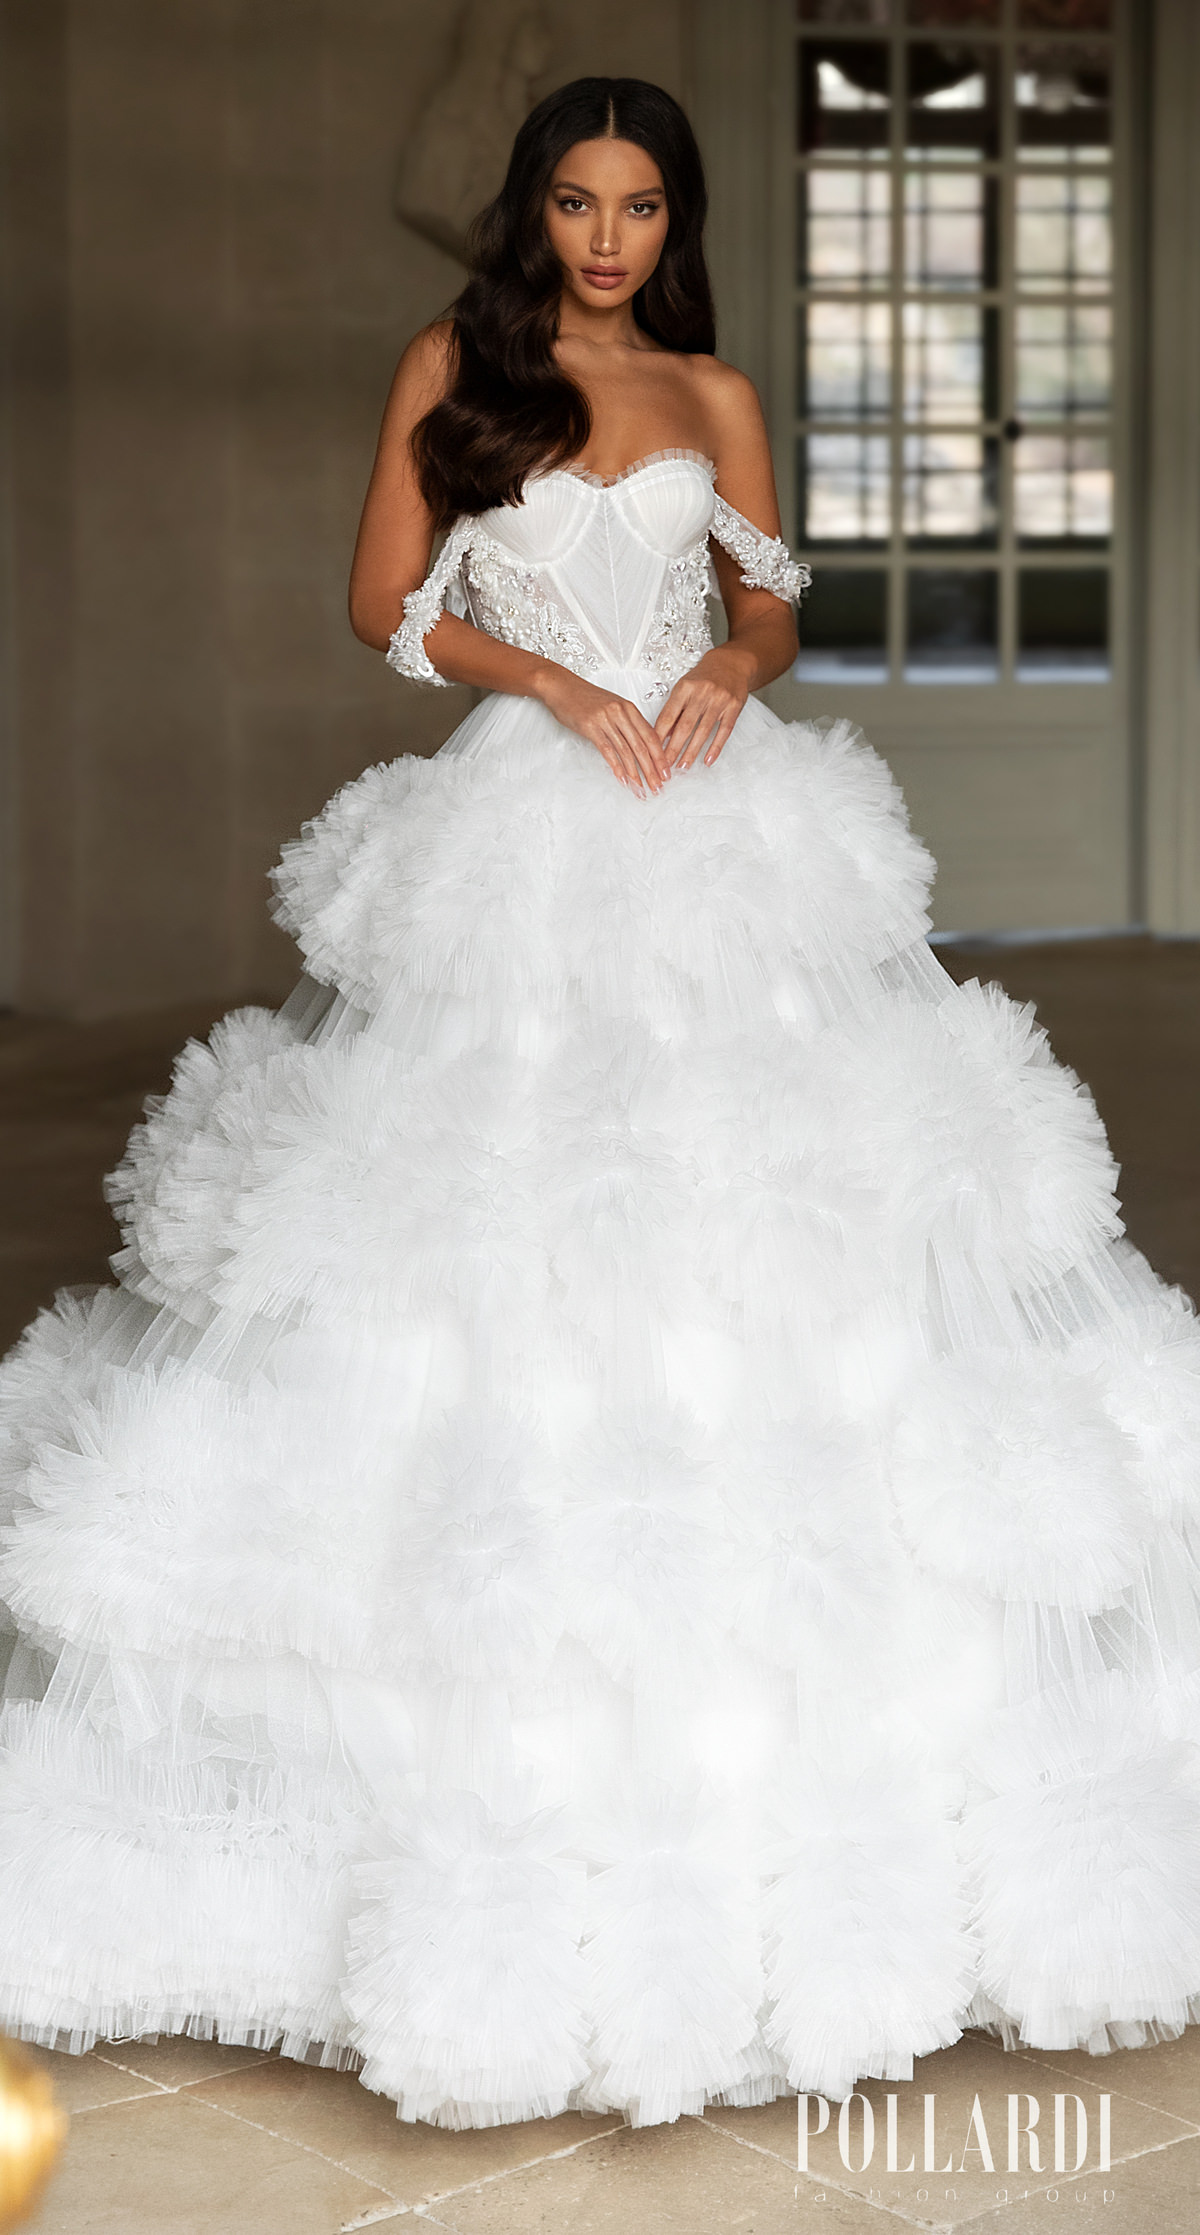 Pollardi Wedding Dresses 2021 Royalty Bridal Collection - 3199_1 Royalty